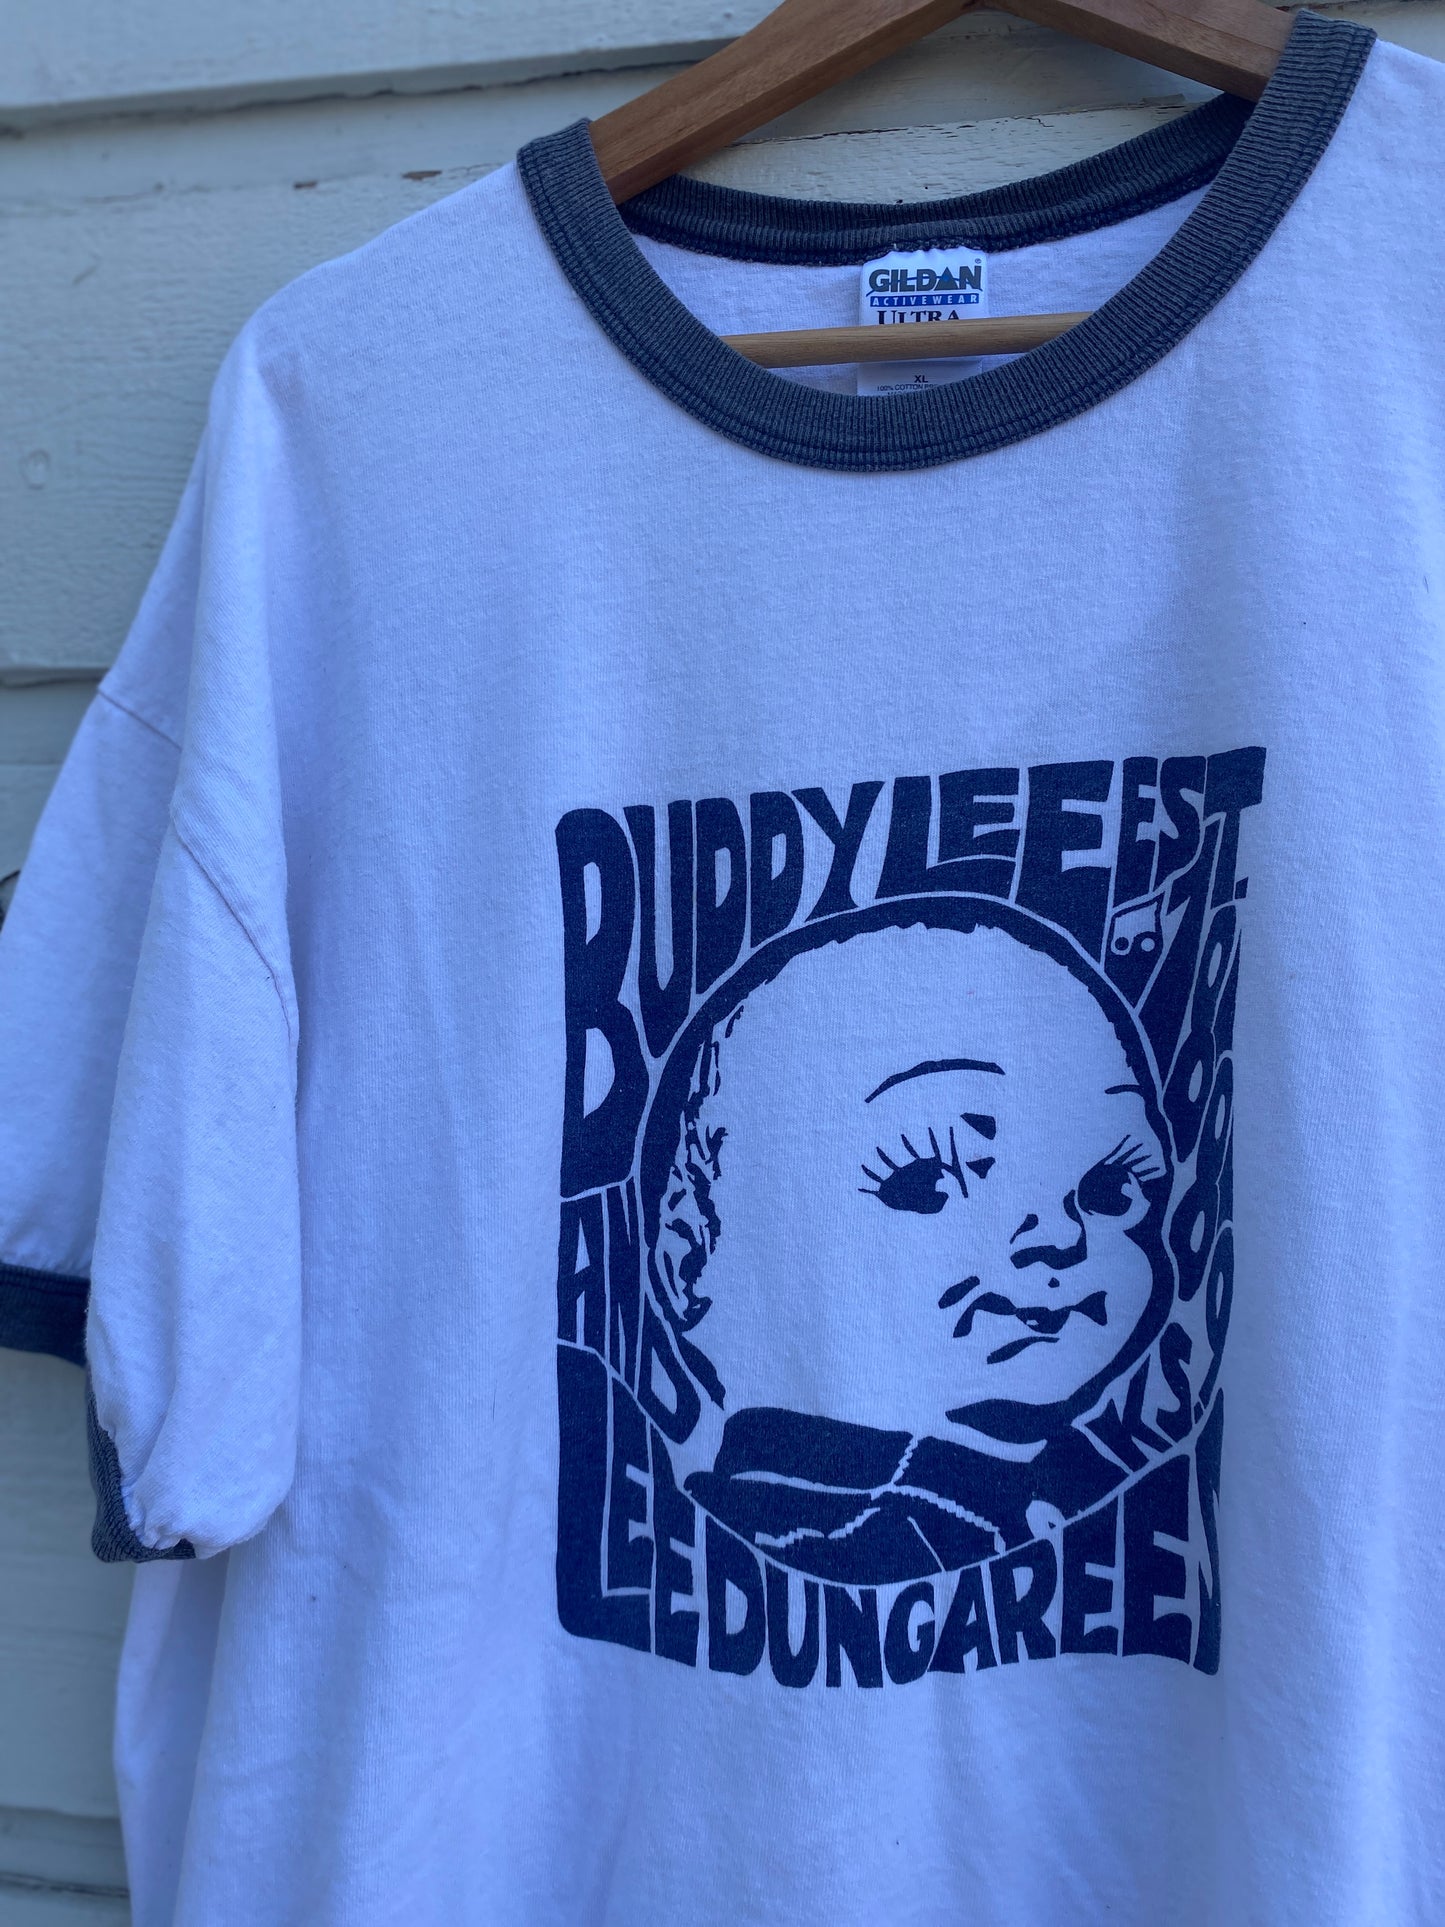 Vintage Buddy Lee Jeans Tshirt Large